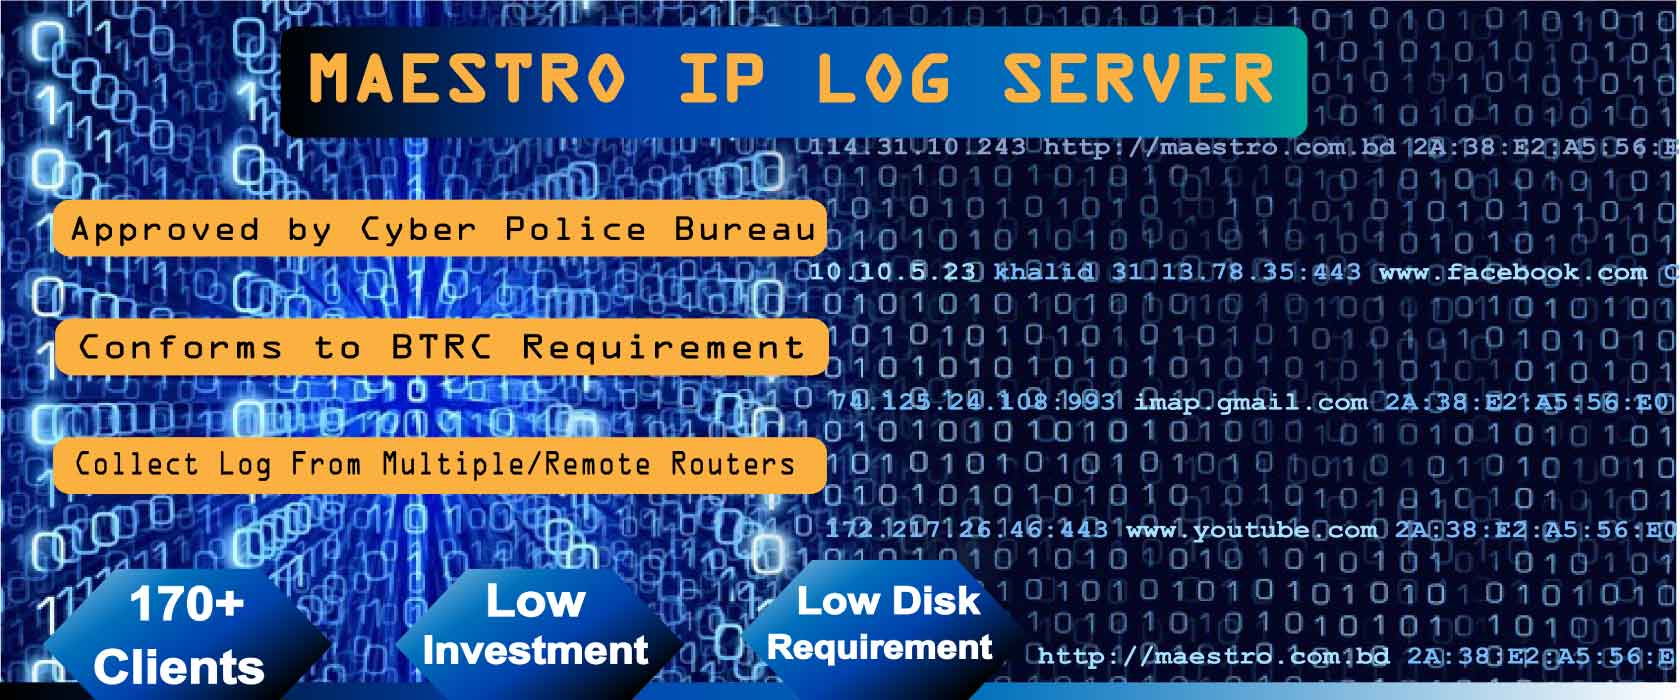 IP LOG Server